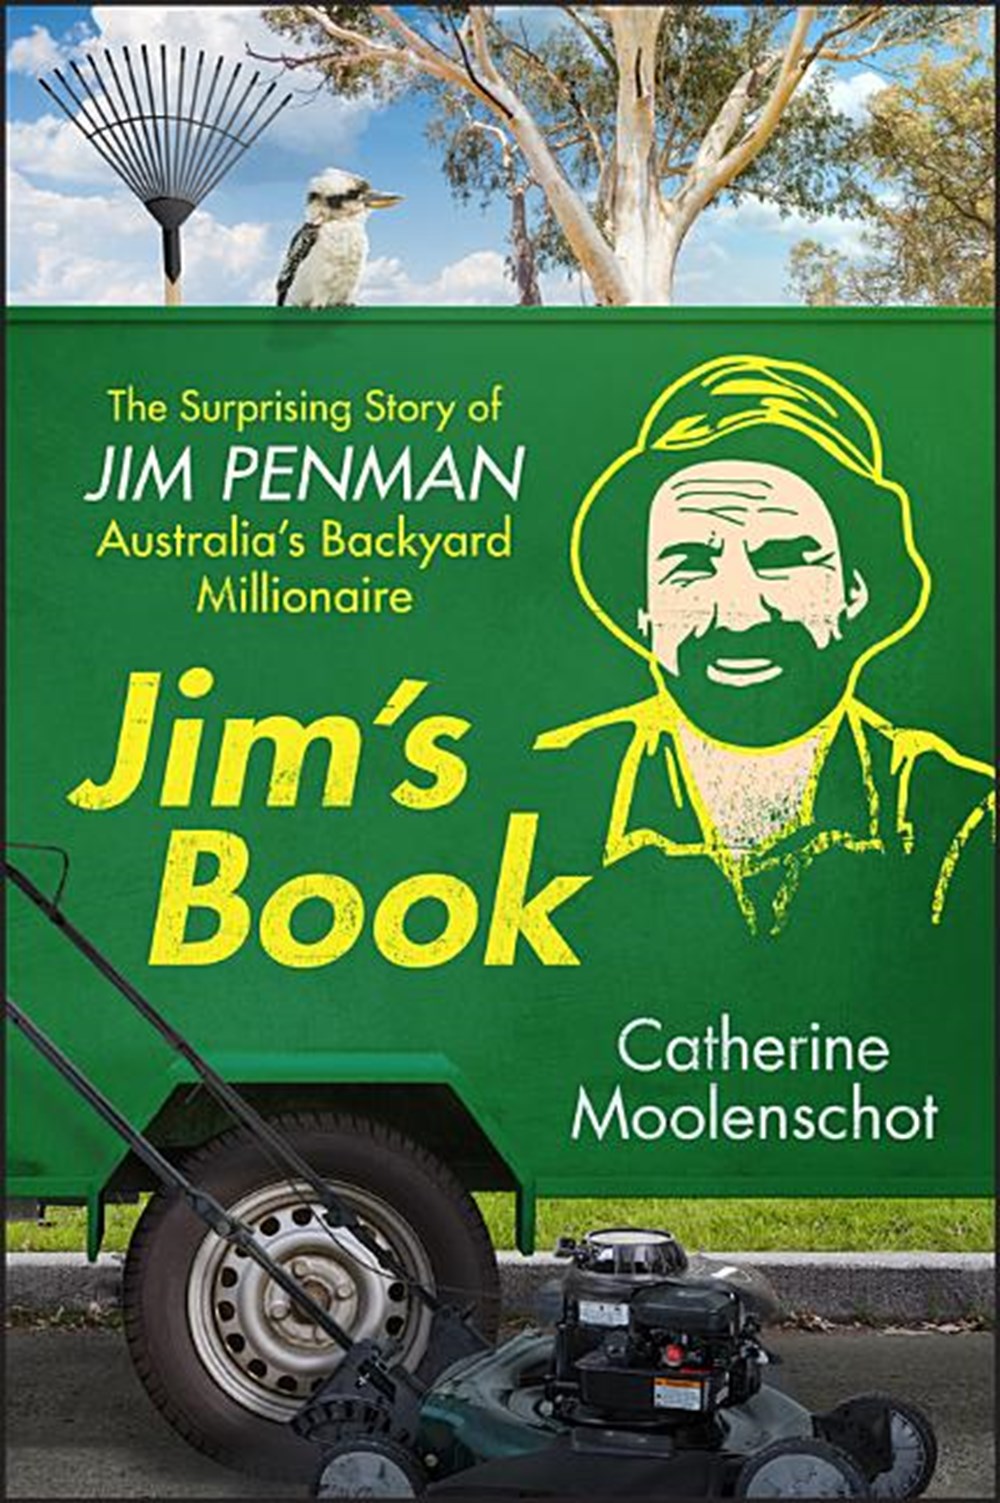 Jim's Book The Surprising Story of Jim Penman - Australia's Backyard Millionaire